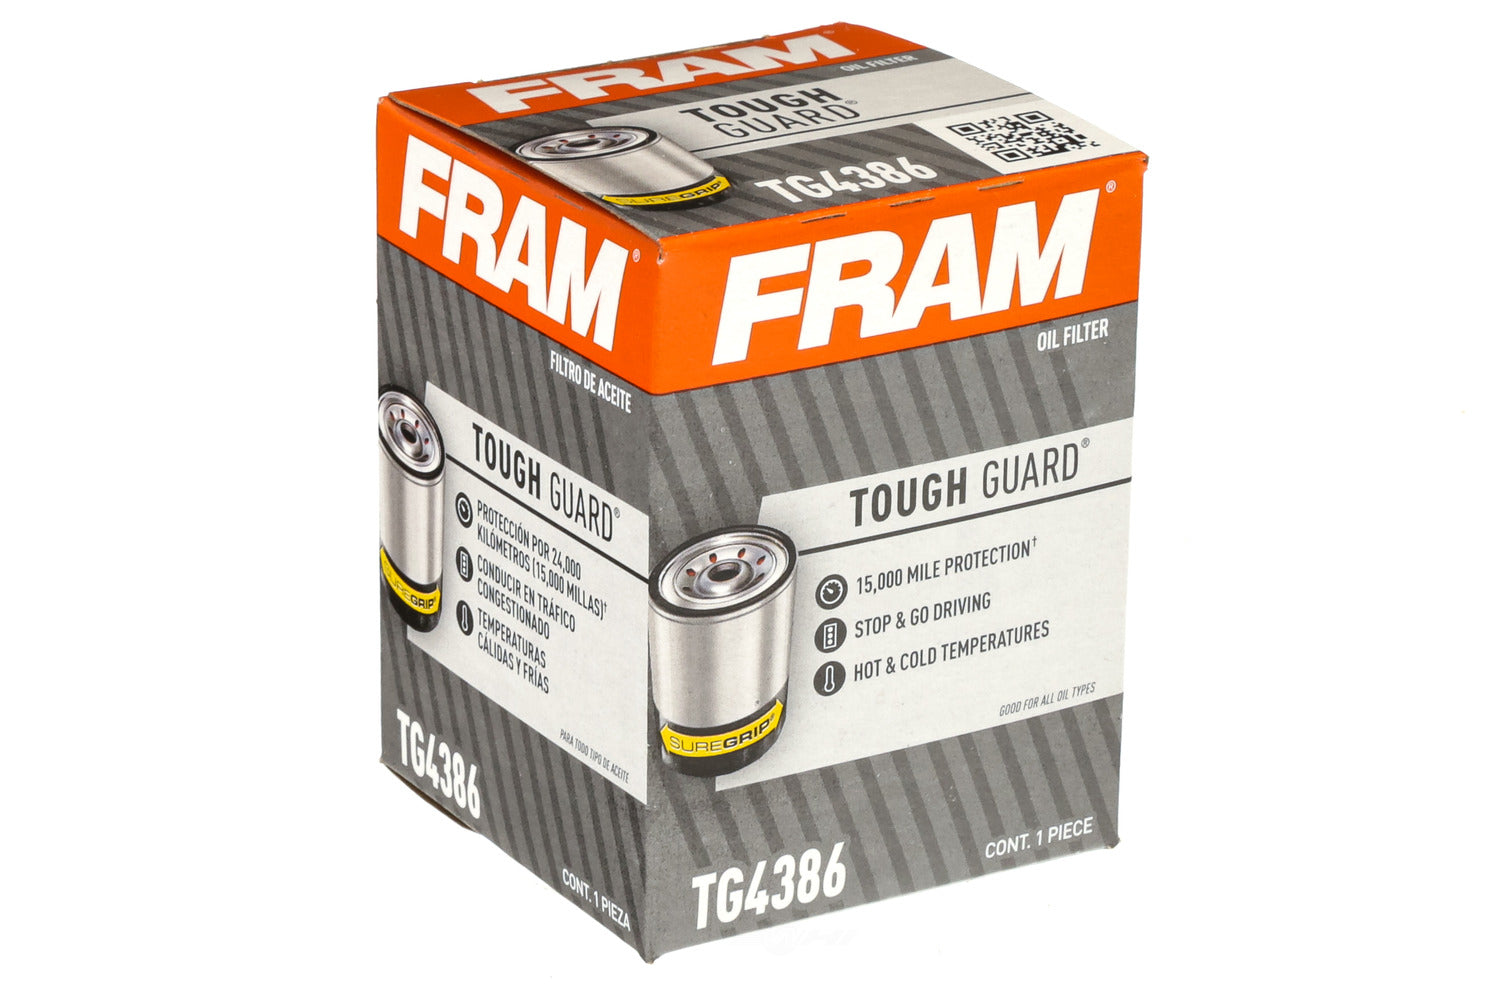 TG4386 FRAM Tough Guard Oil Filter